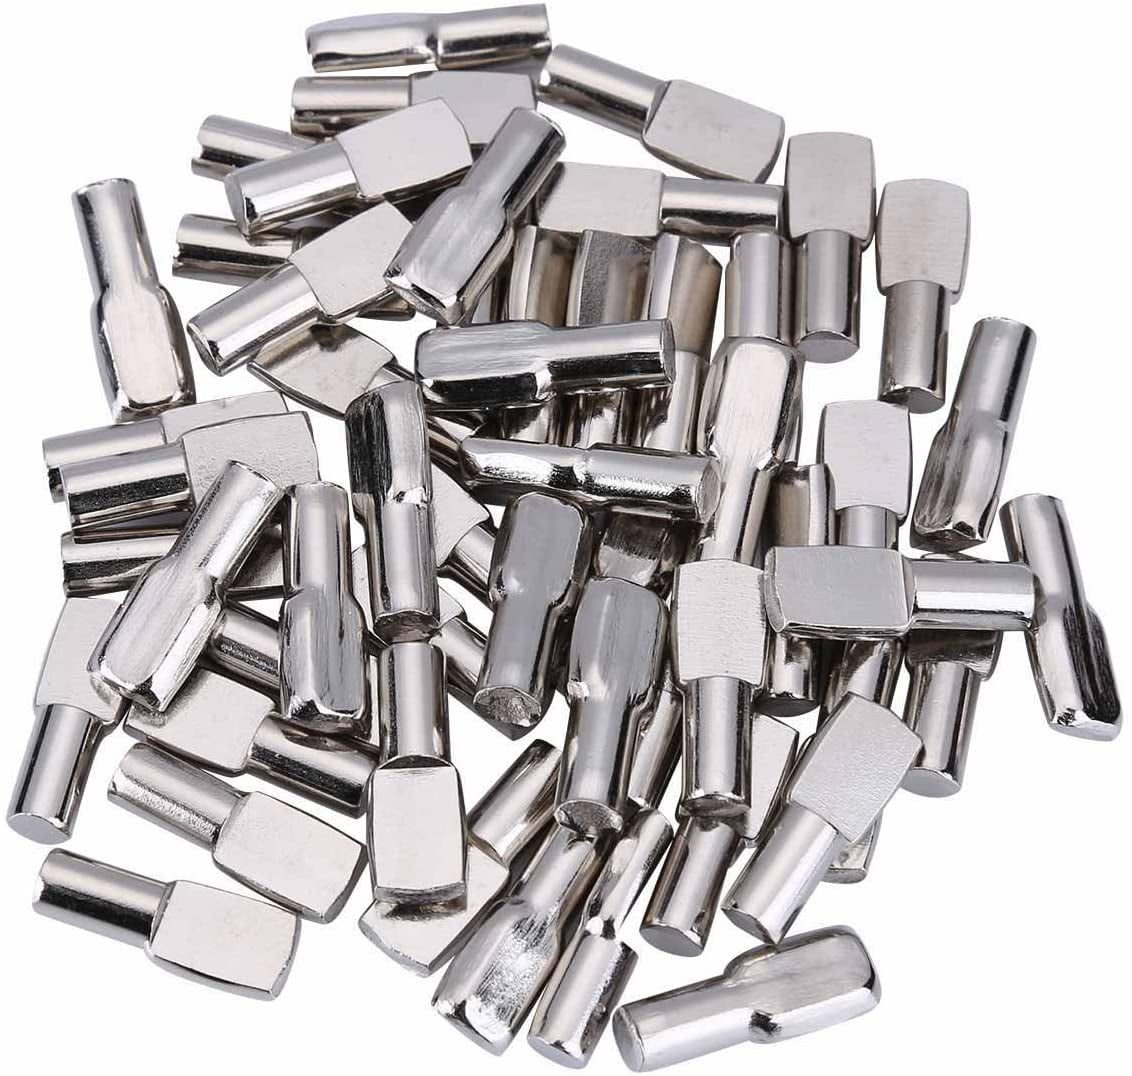  120 Packs Shelf Pins, 5mm Shelf Support Pegs Spoon Shape  Cabinet Furniture Tbestmax : Tools & Home Improvement